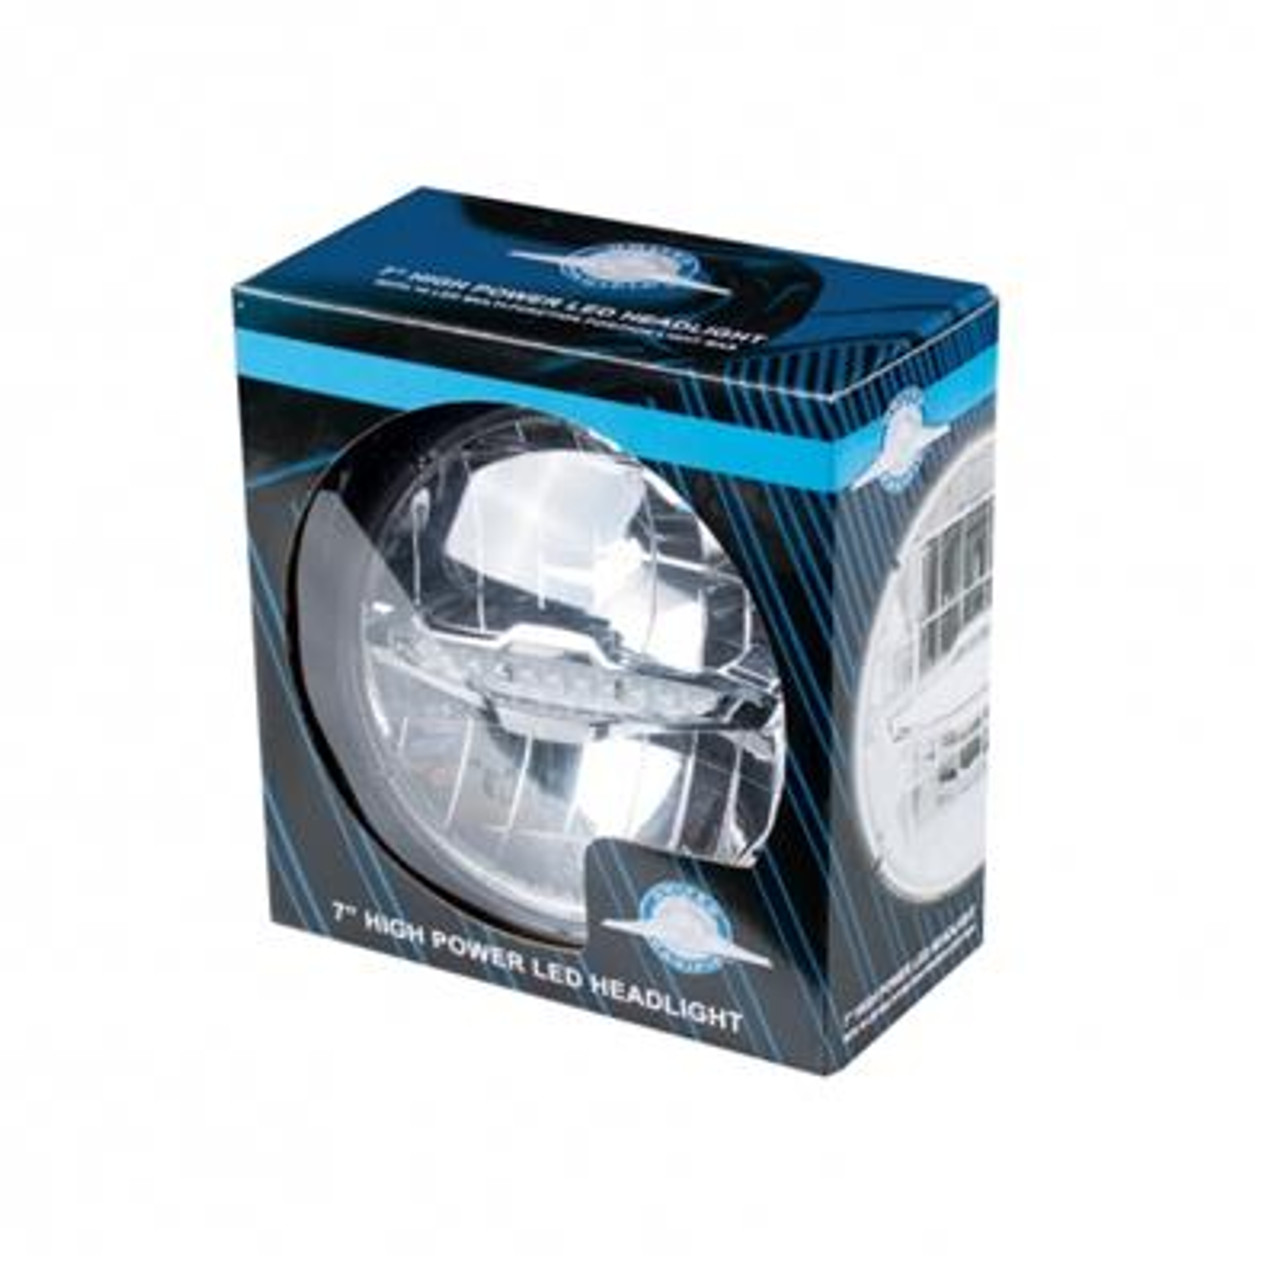 ULTRALIT - 3 High Power LED 7" Headlight With 10 White LED Position Light